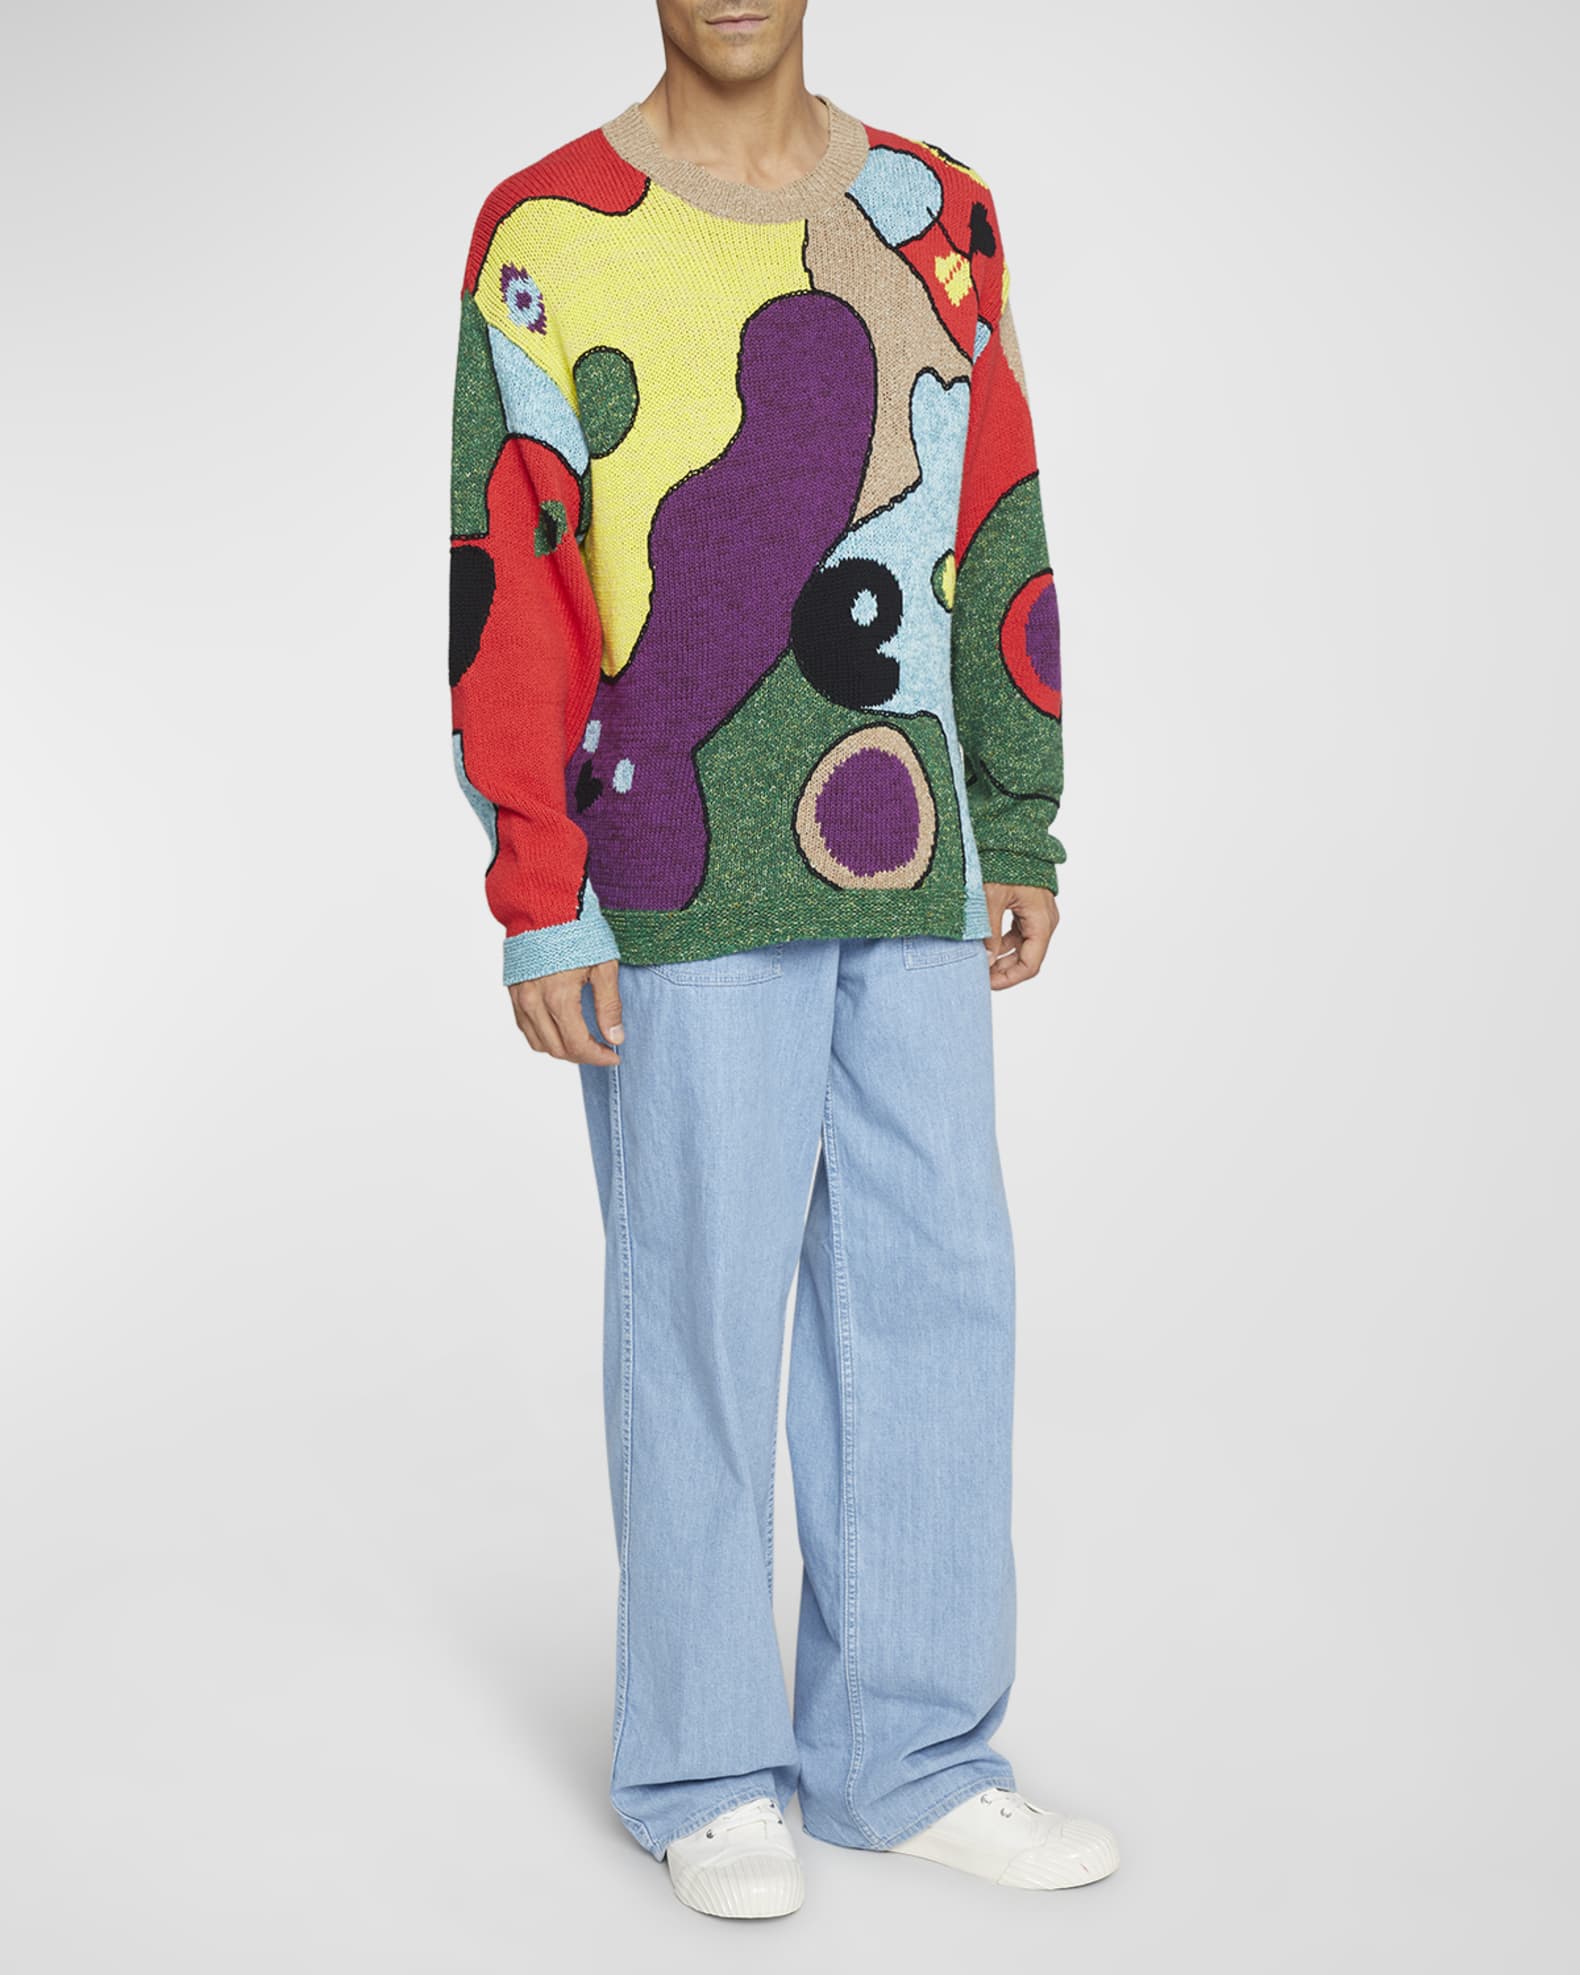 Kenzo Men's Kenzoo Multicolor Intarsia Sweater | Neiman Marcus